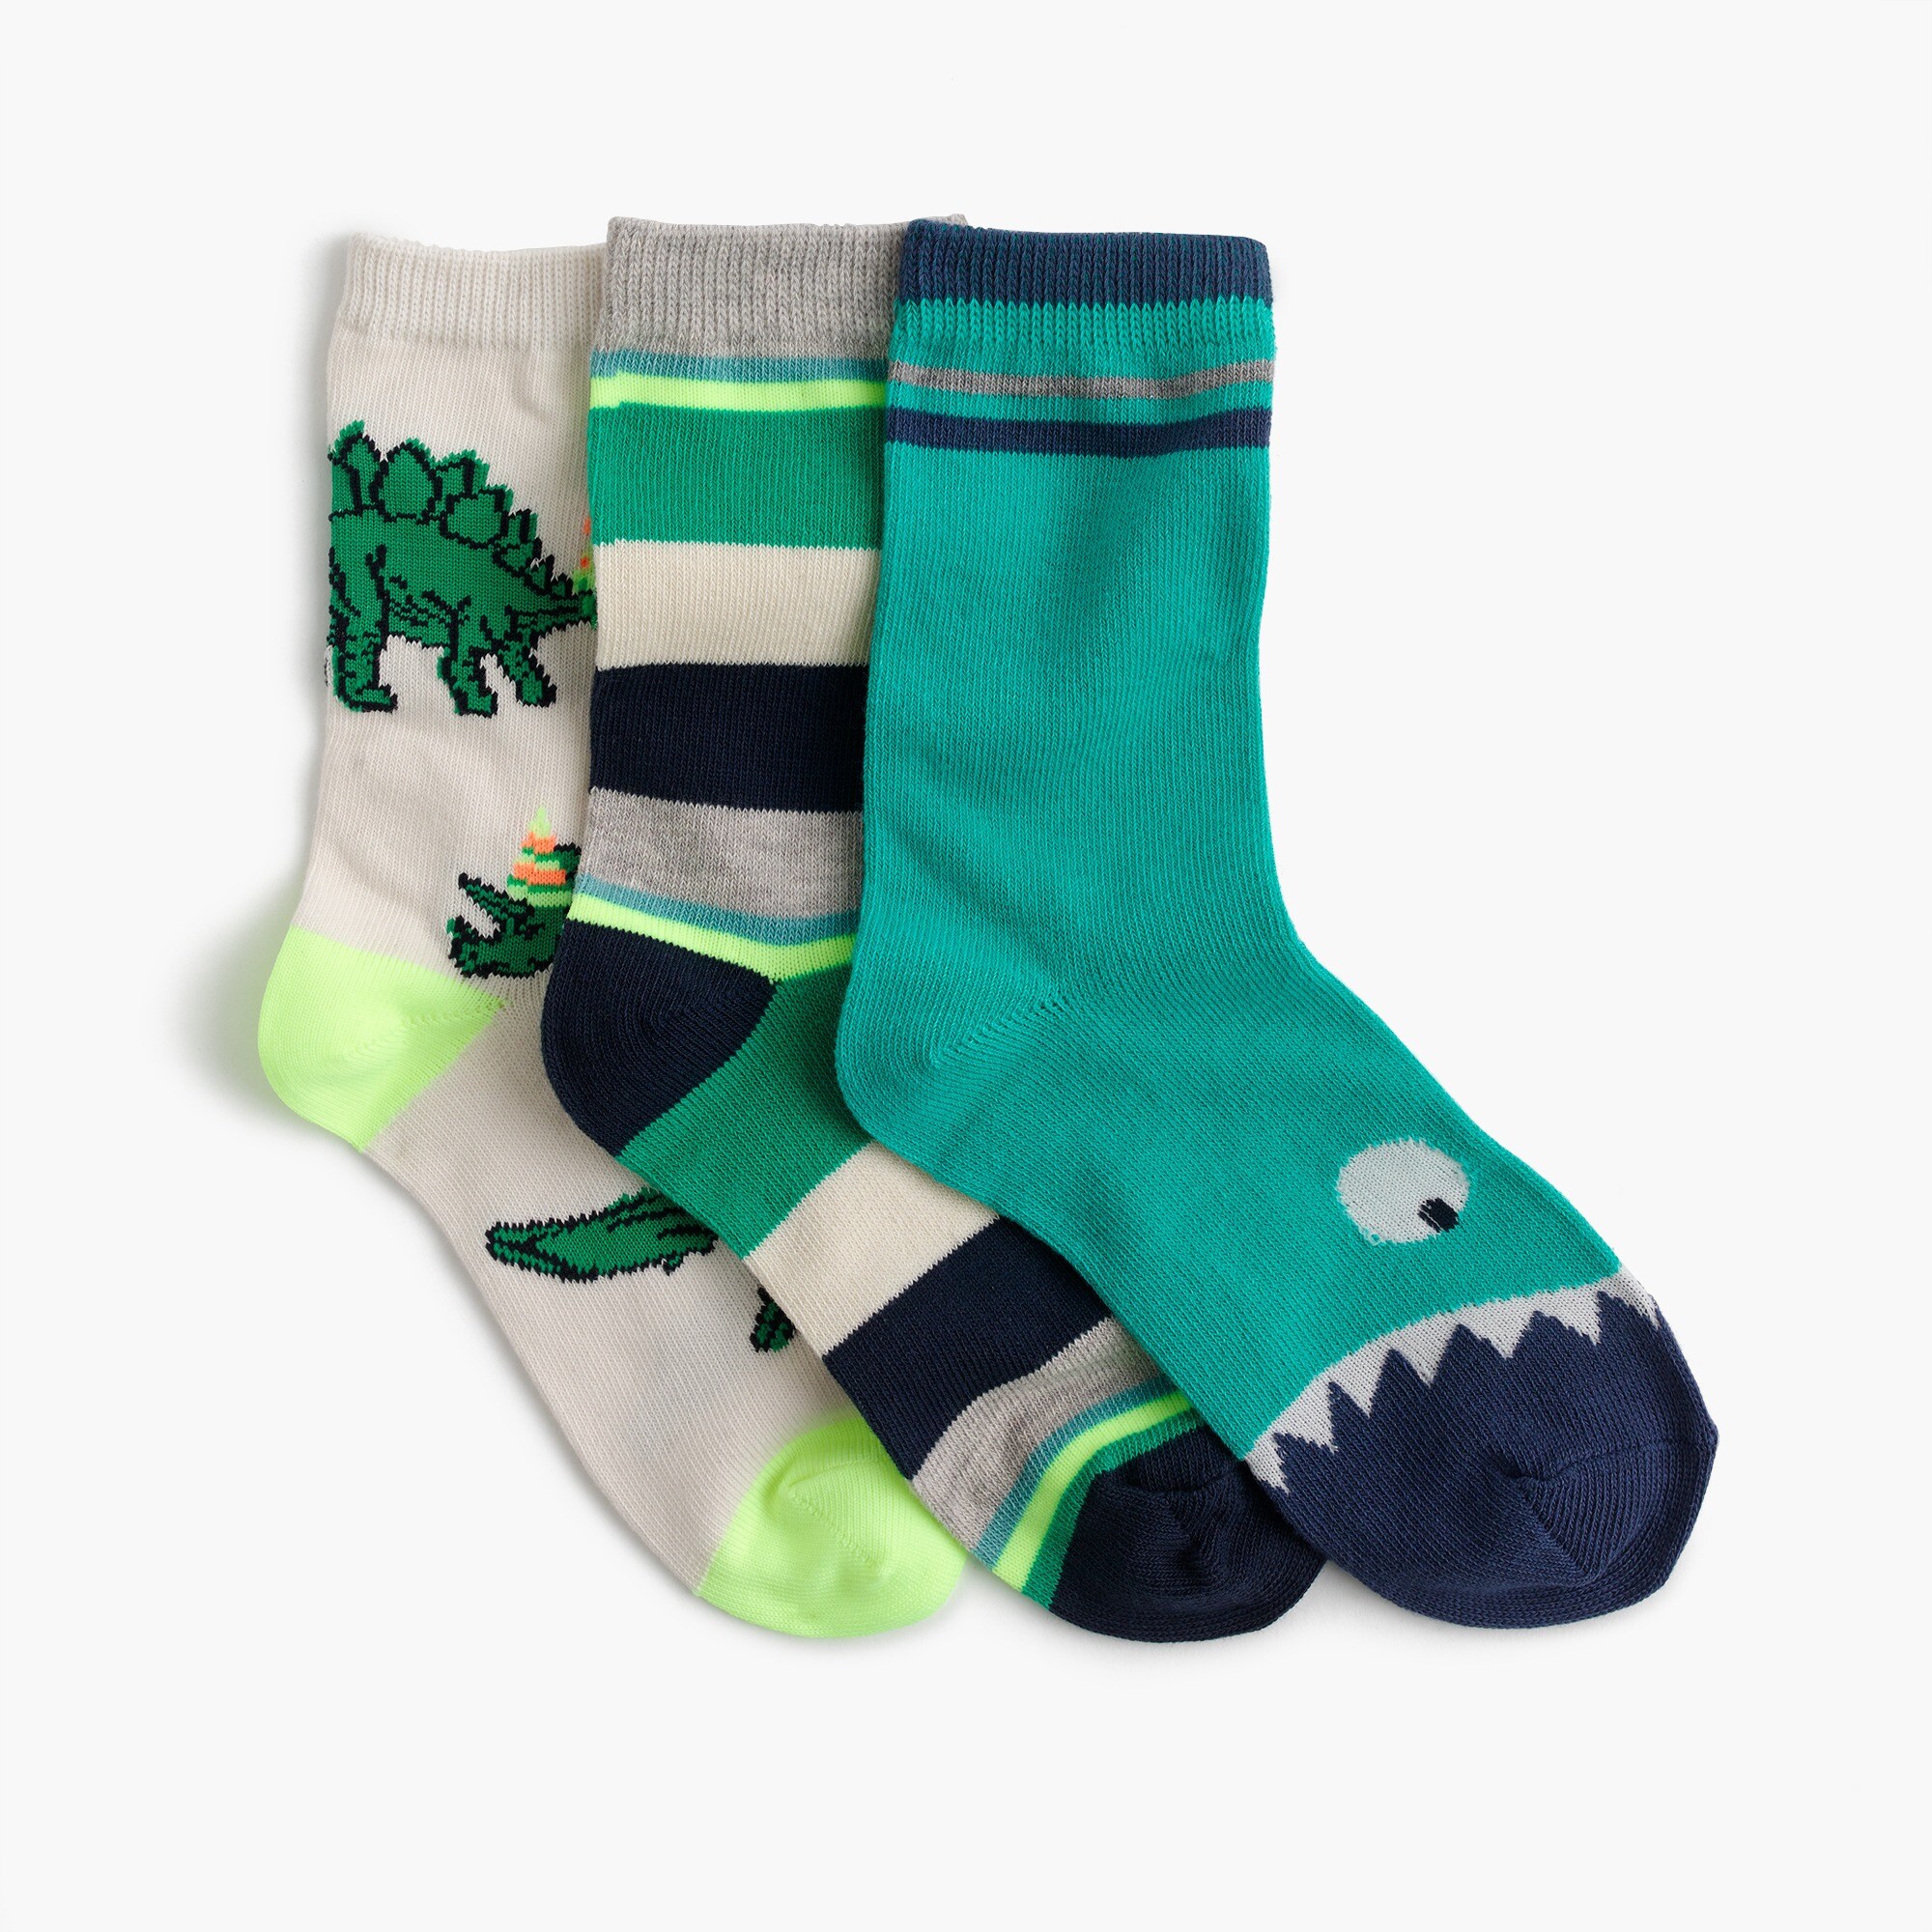 Boys' dinosaur socks three-pack : Boy socks | J.Crew